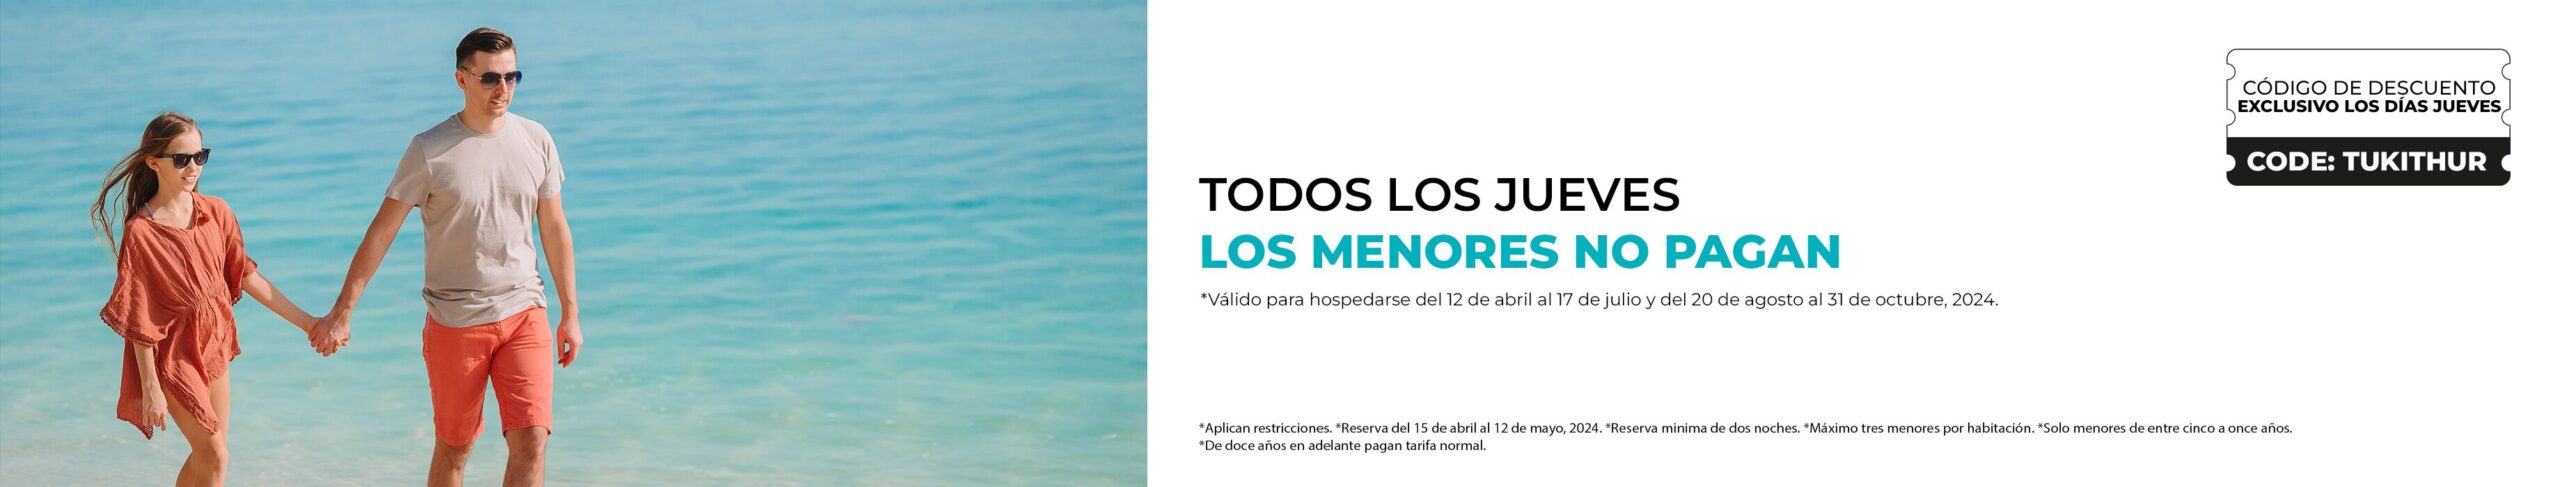 Aspira Hotel Playa Del Carmen Ofertas Pop Up Web 05